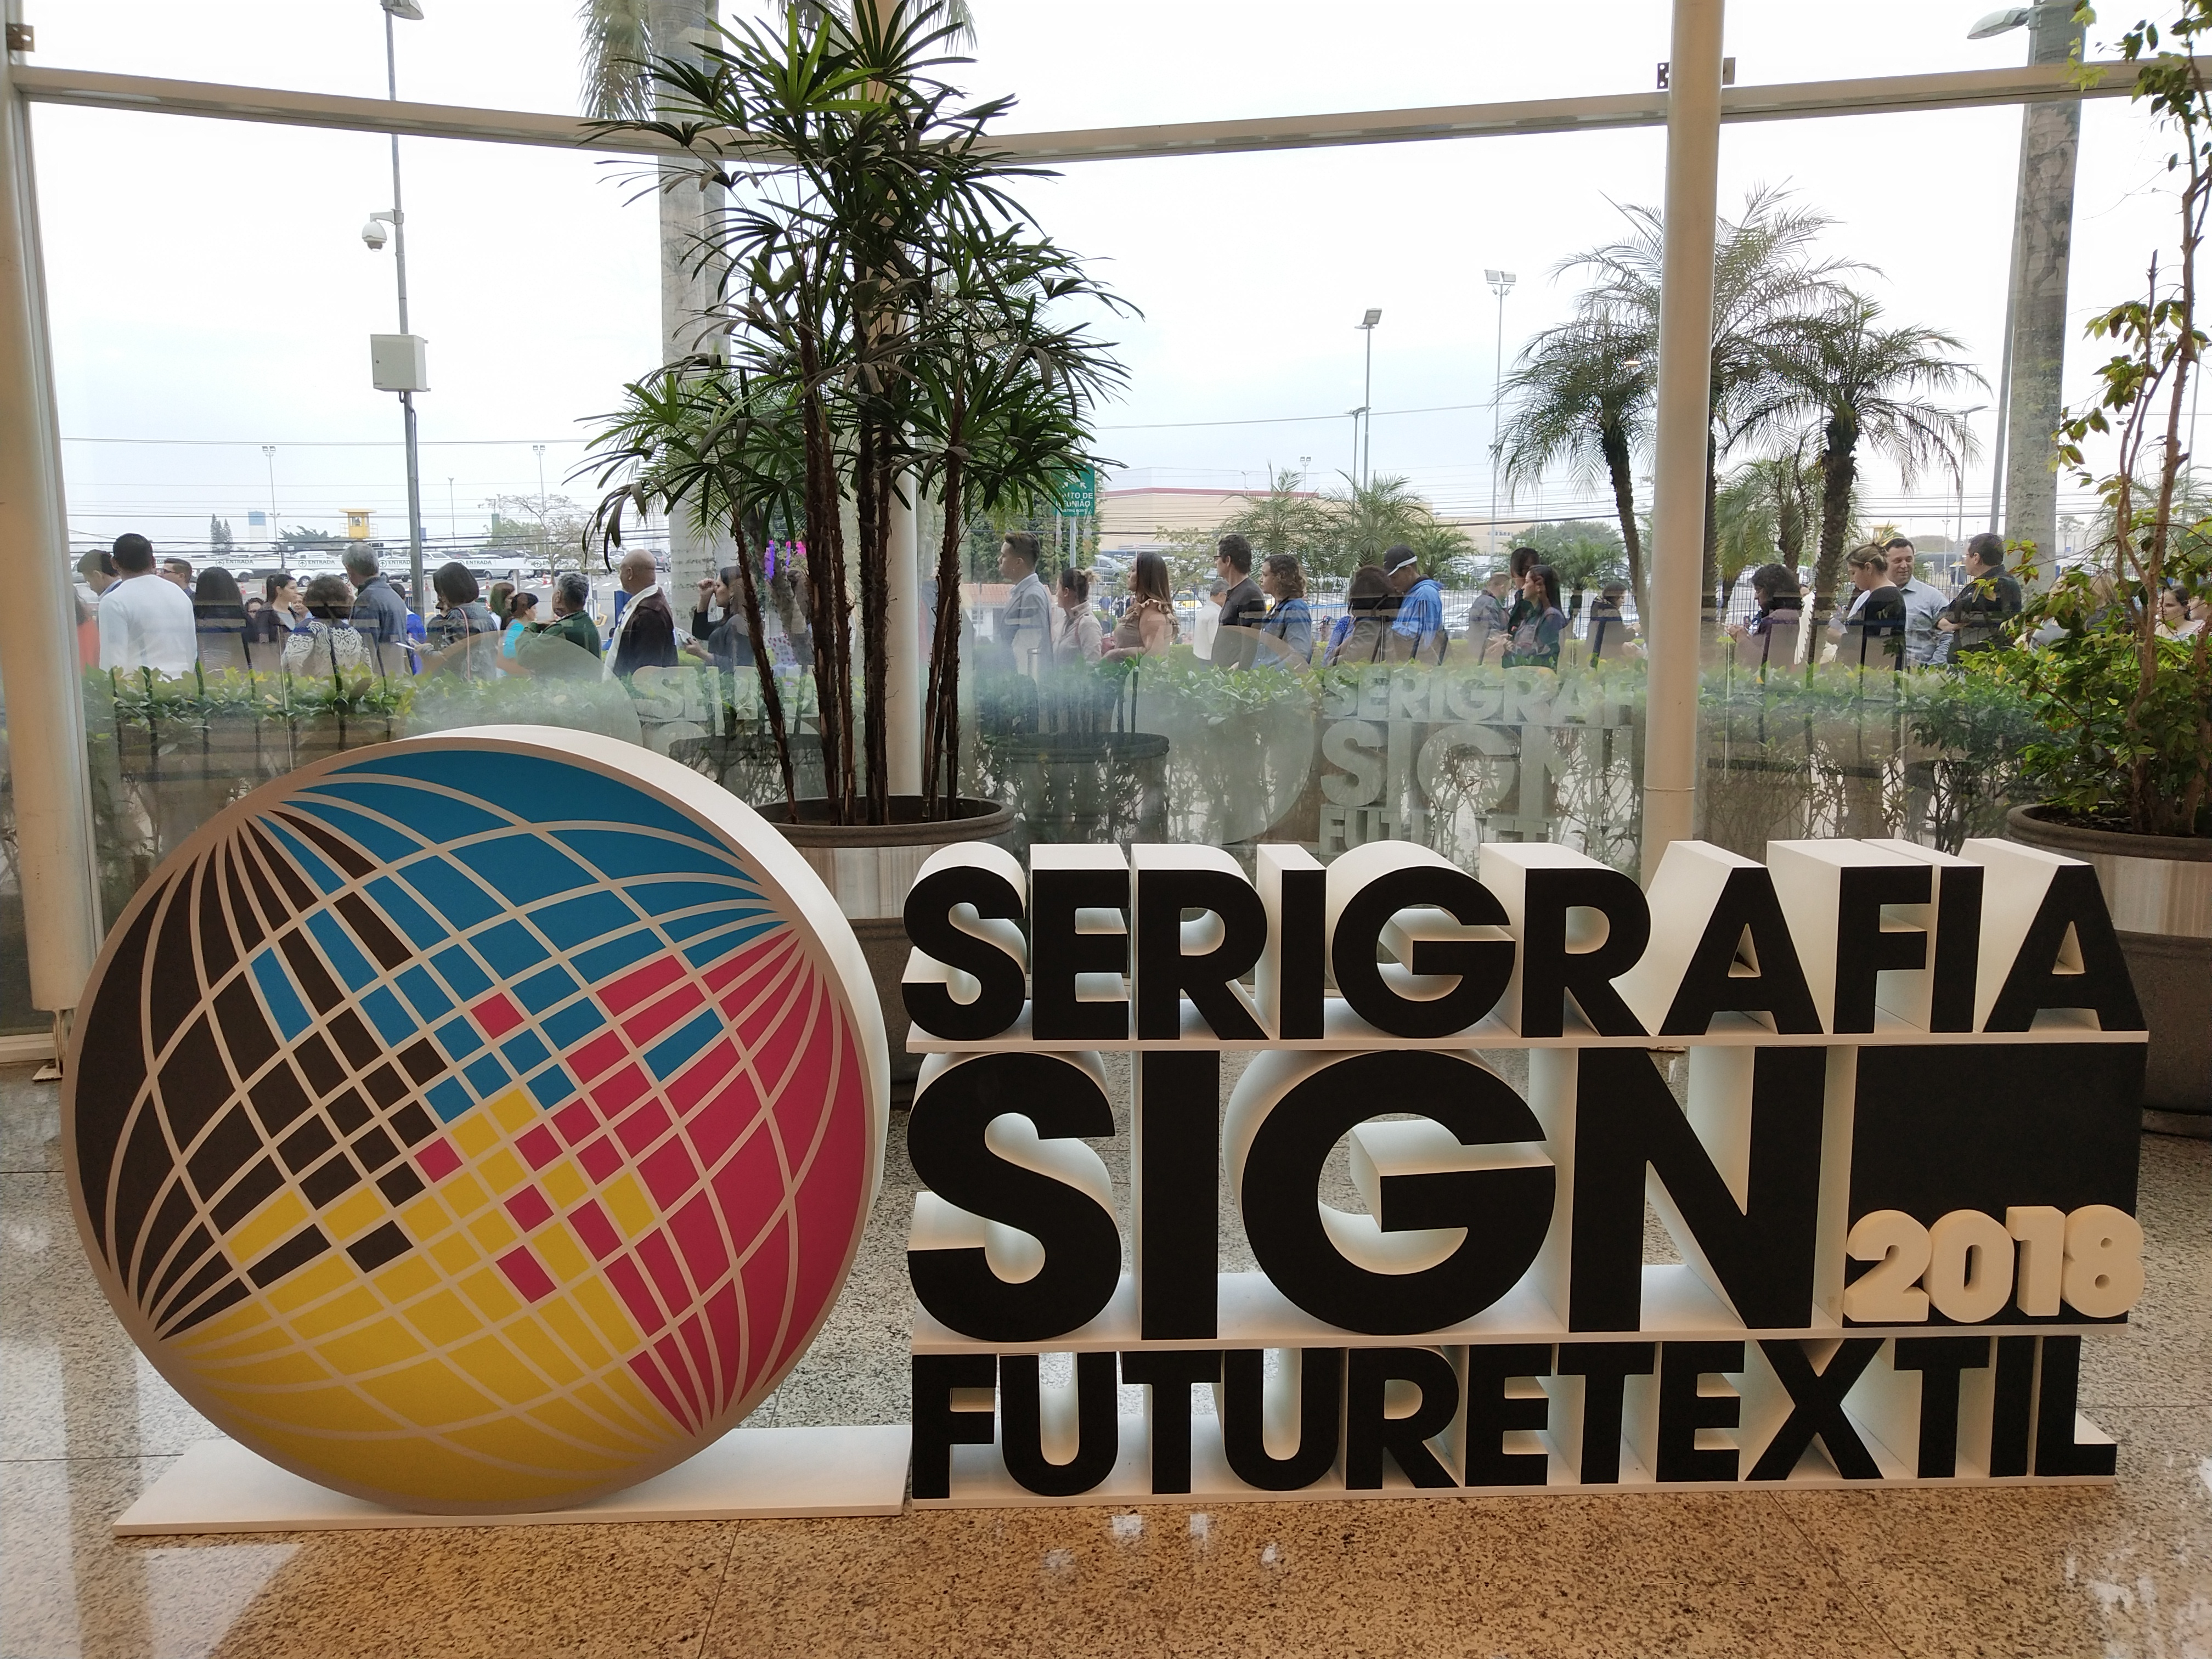 Serigrafia Sign Future TEXTIL 2018 in Brazil